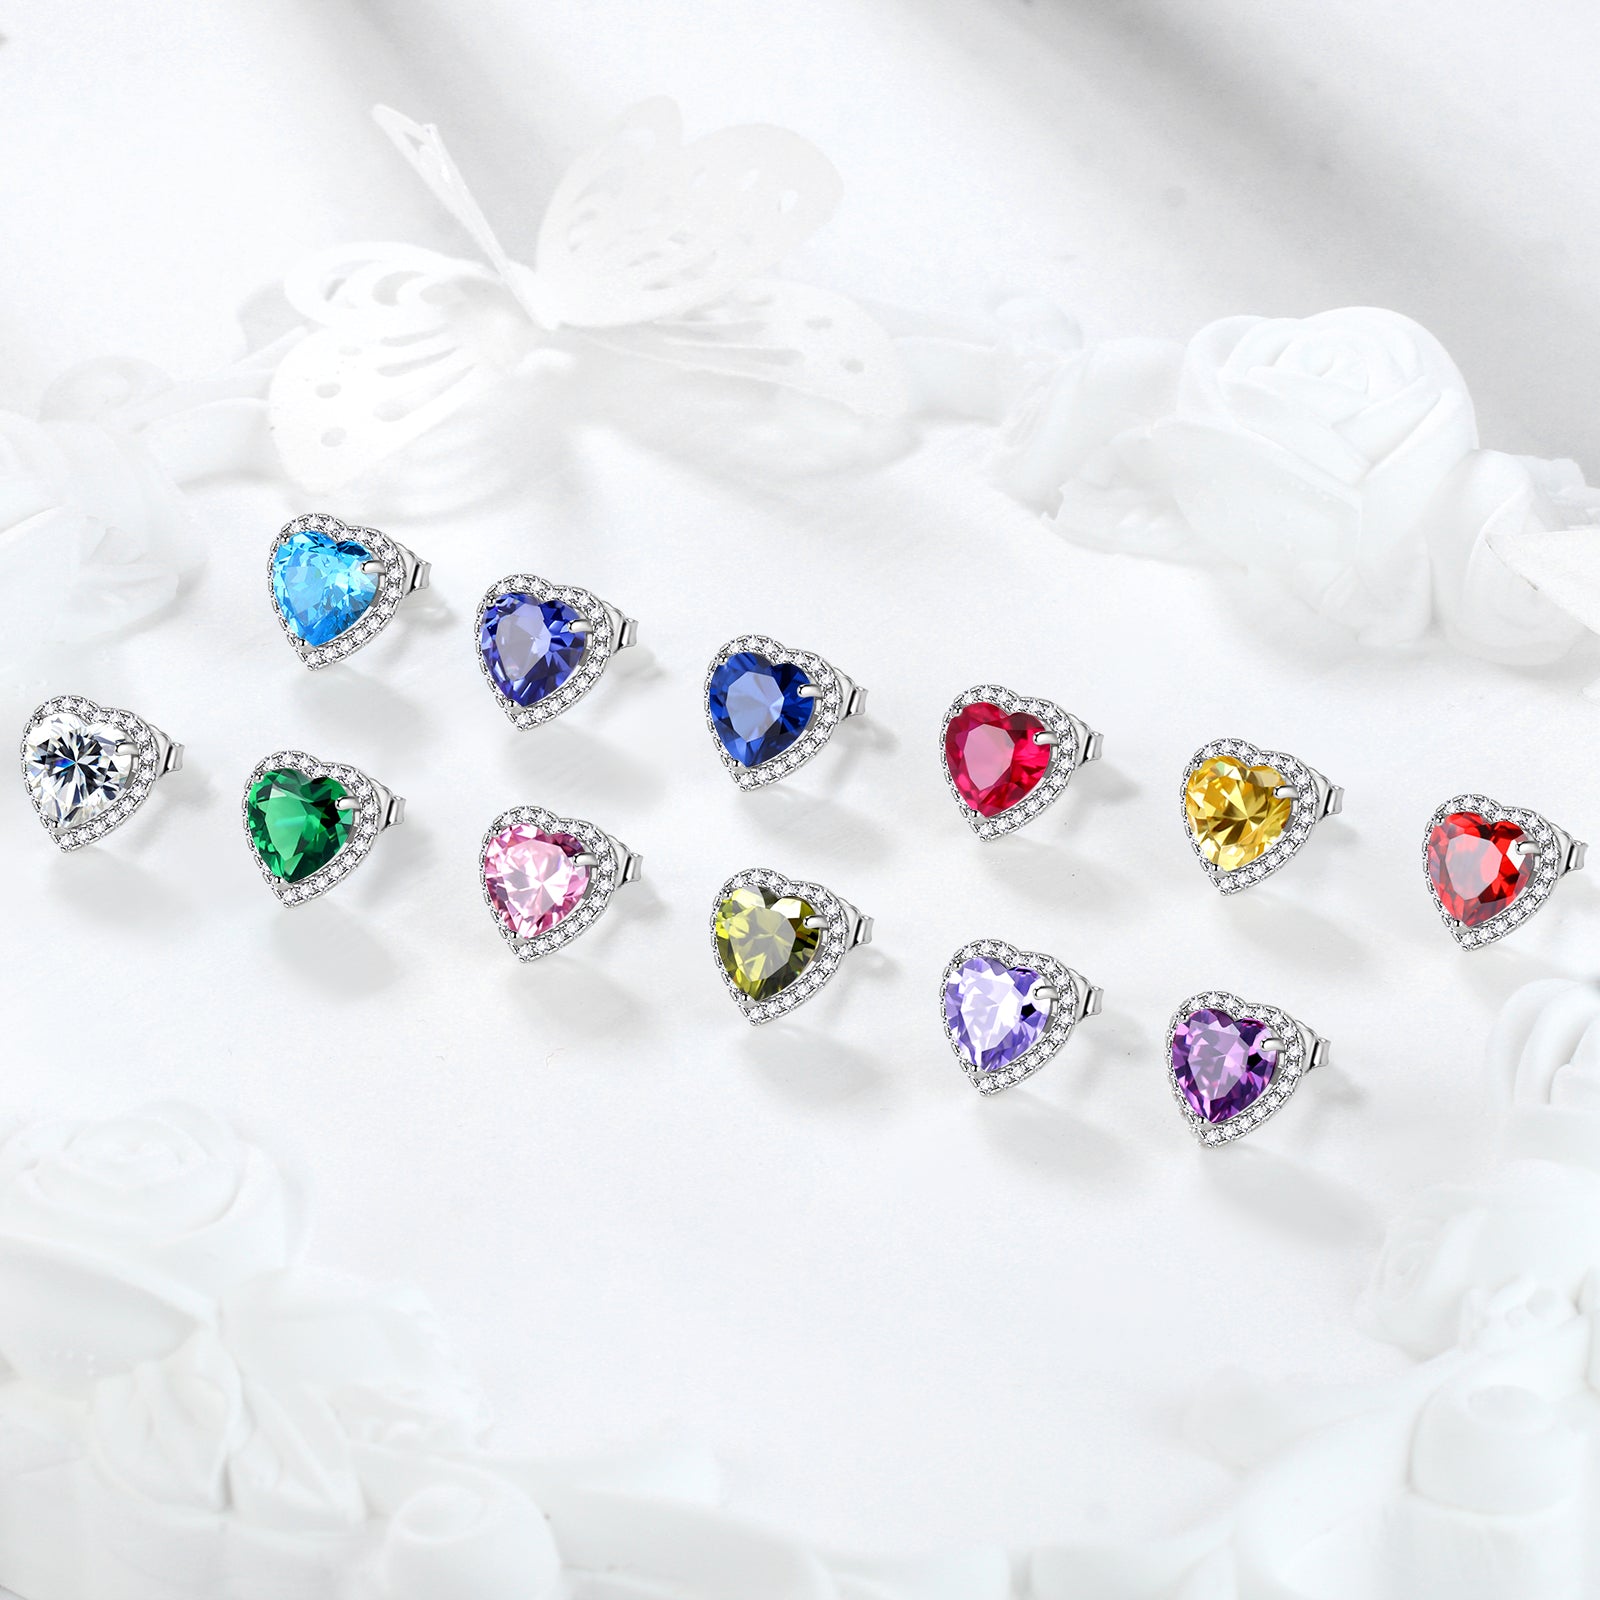 Hearts Jewelry Sets 3PCS Women Birthstone Necklace Earrings Girls Jewelry Birthday Gift 925 Sterling Silver - Aurora Tears Jewelry